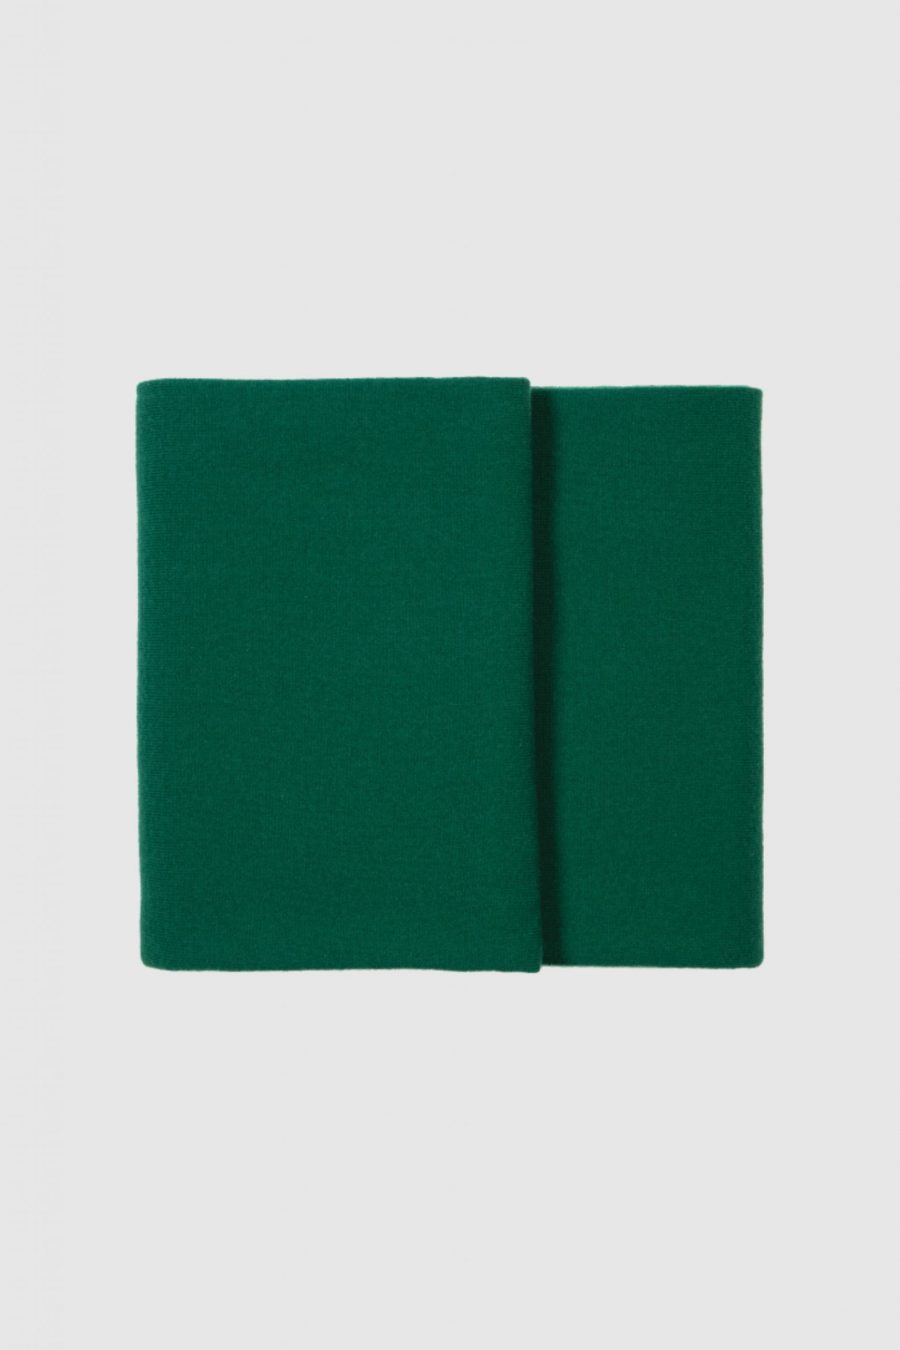 Cashmere blanket in Emerald Green